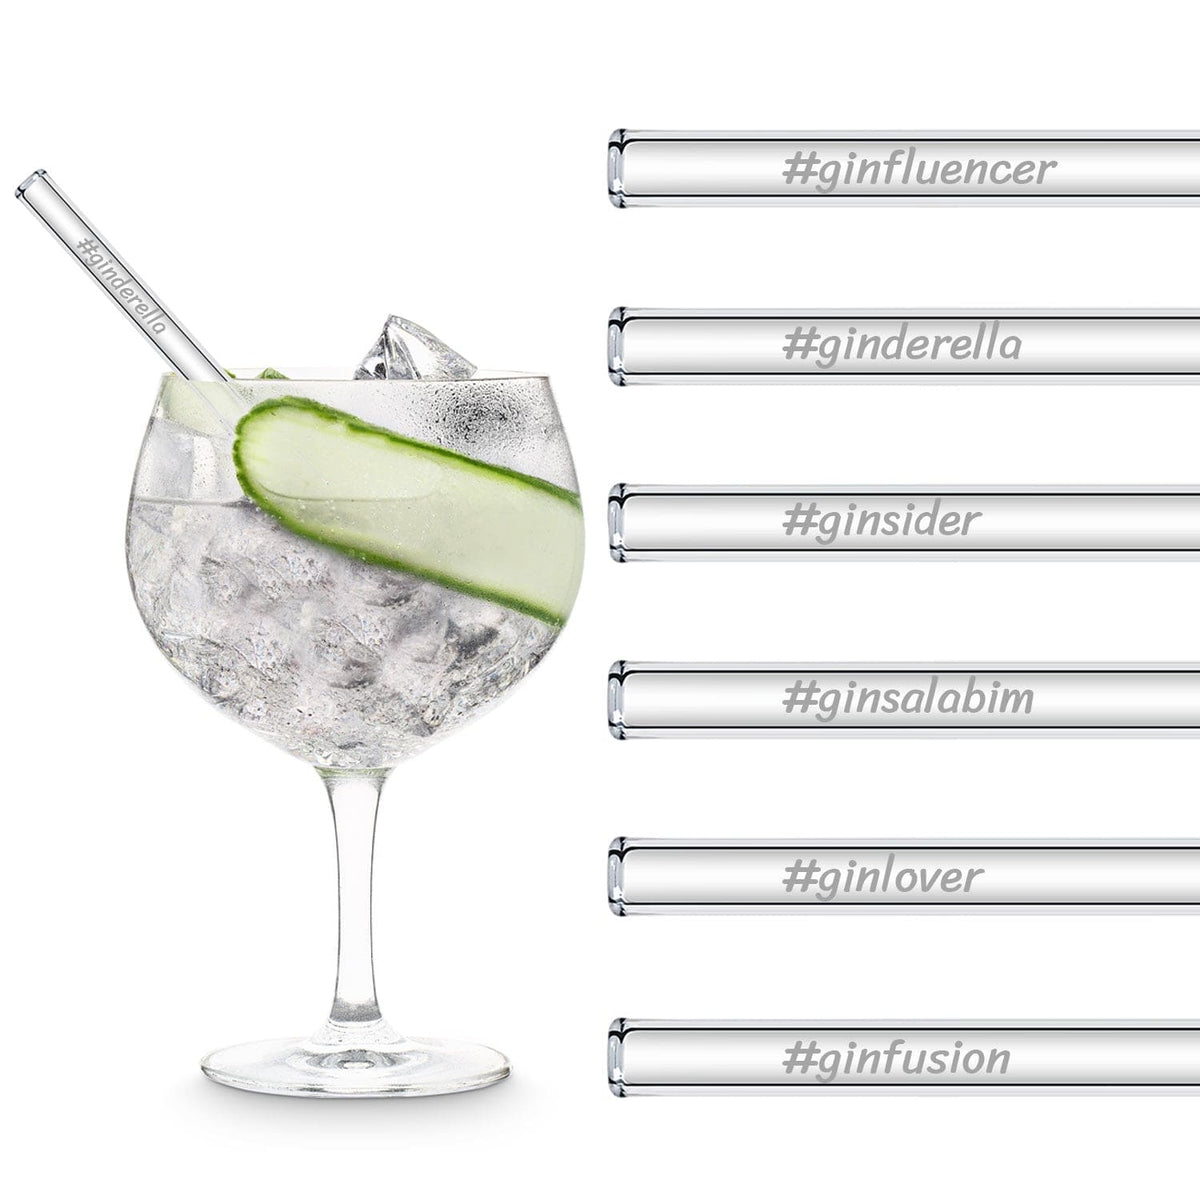 RIEDEL Glasses - Gin Tonic Set - GINSIDERS